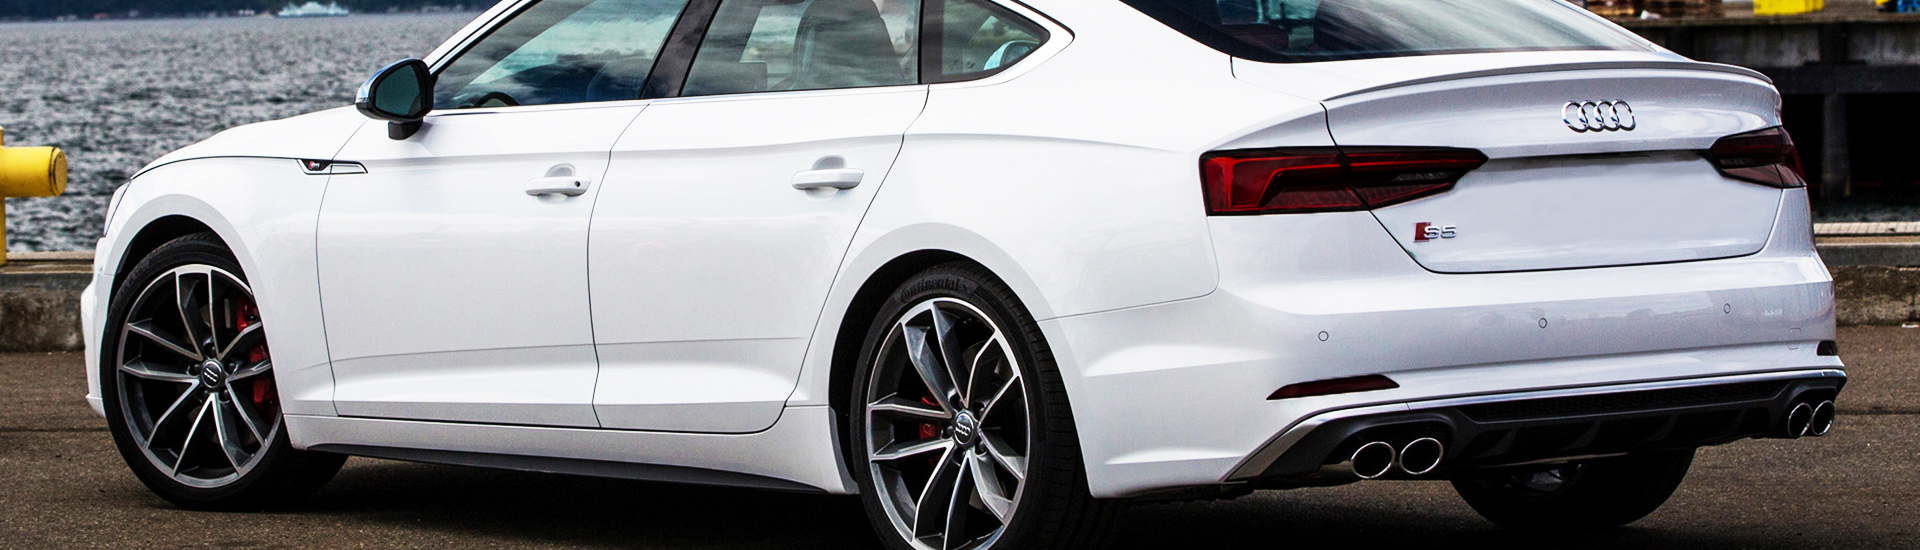 Audi S5 Tail Light Tint Covers